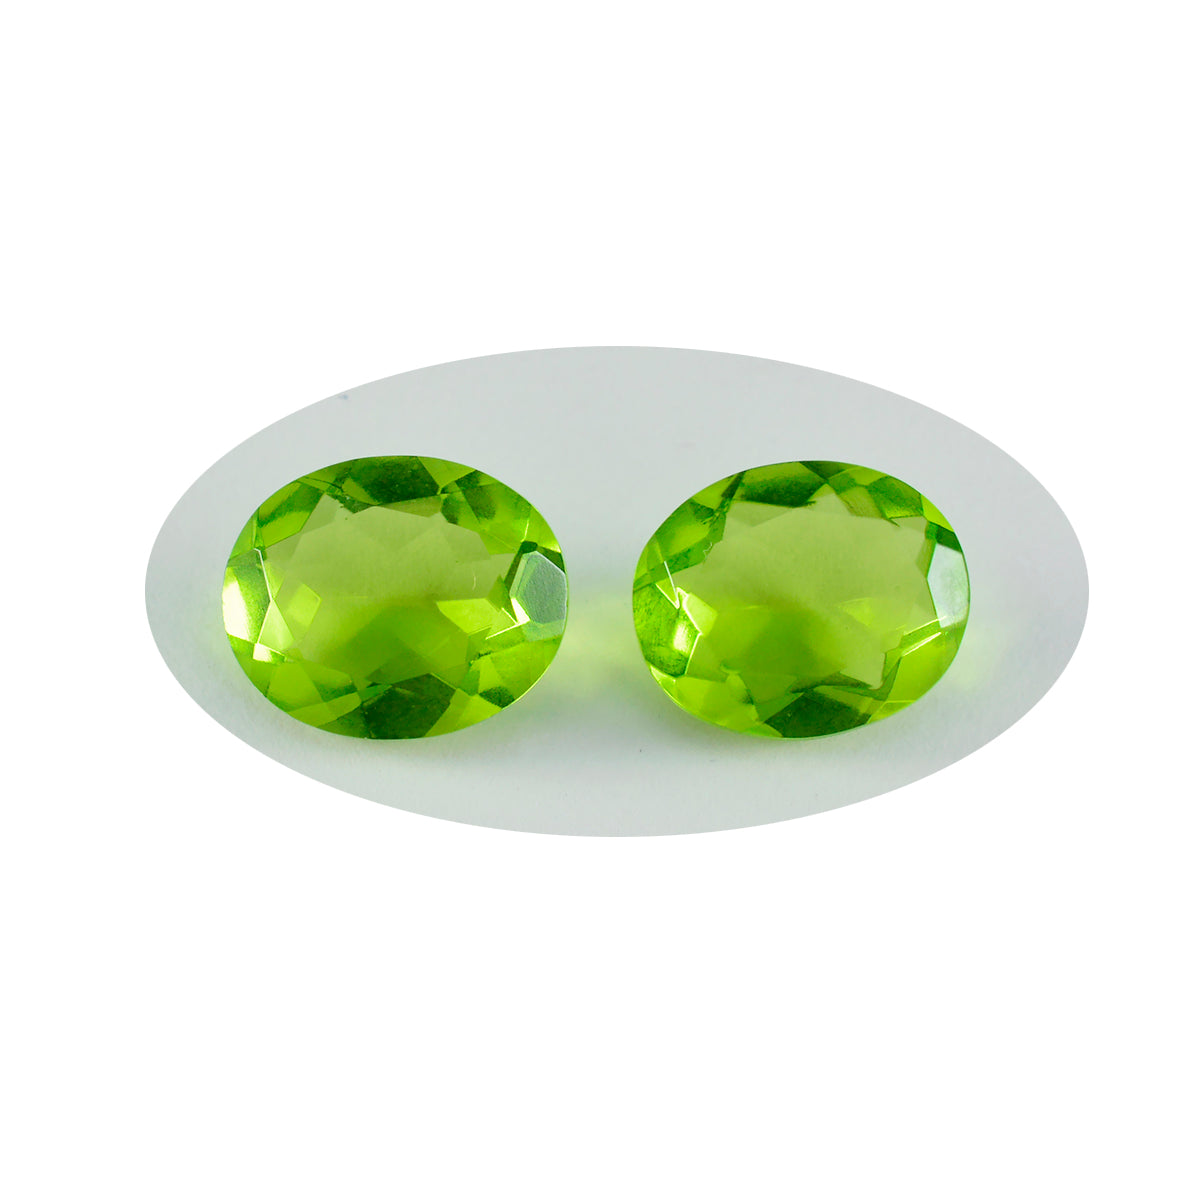 Riyogems 1PC Green Peridot CZ Faceted 10x14 mm Oval Shape lovely Quality Gemstone